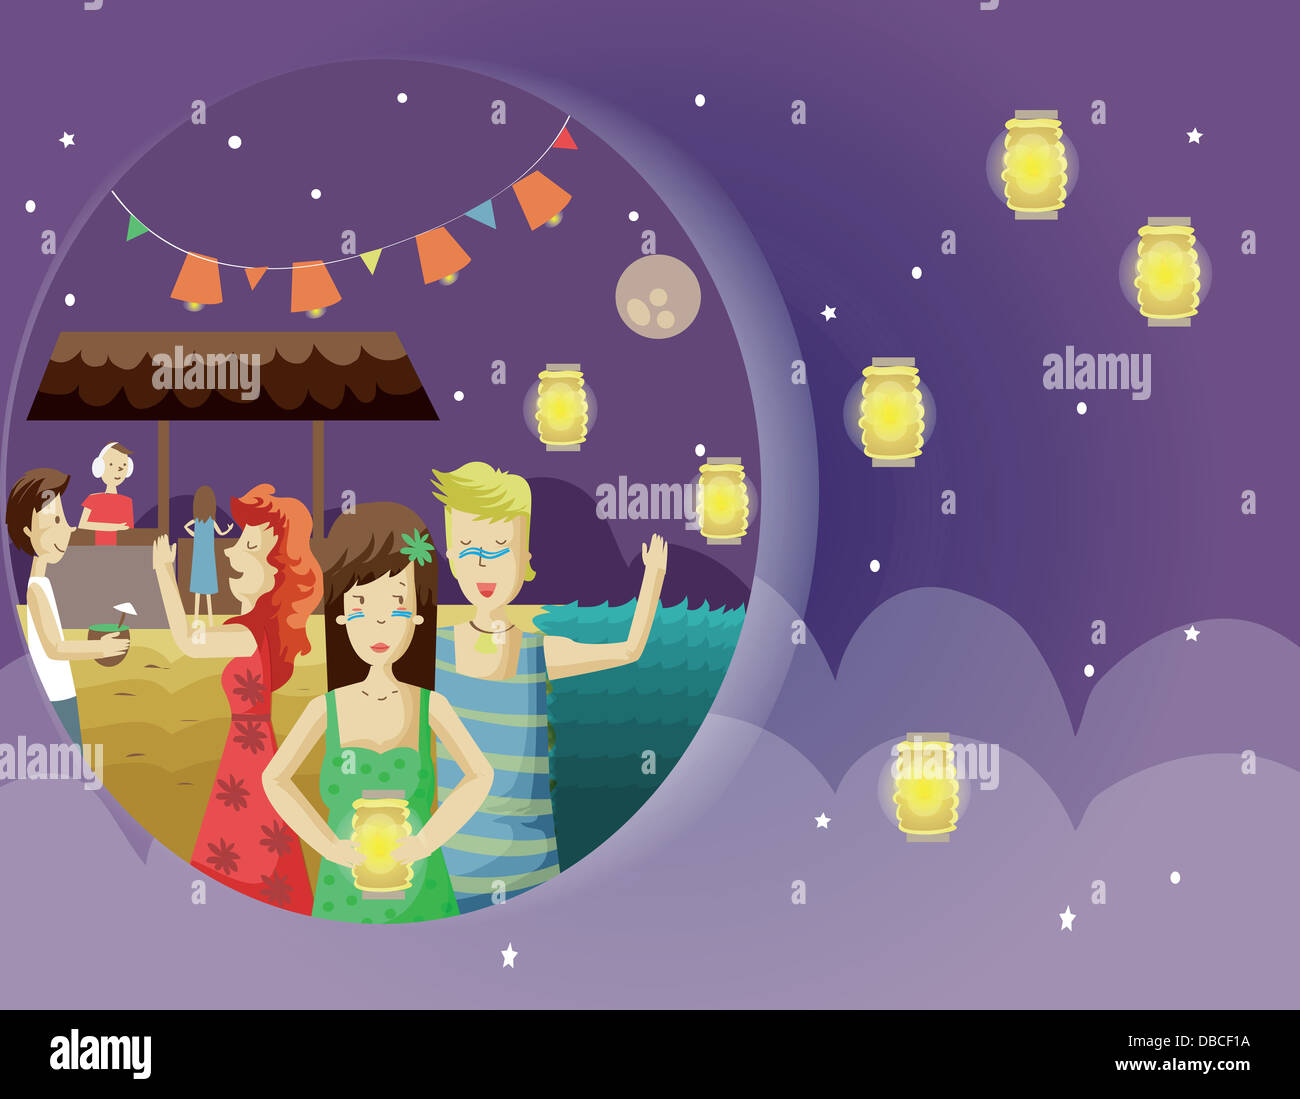 Illustration of people celebrating lantern festival at night Stock Photo